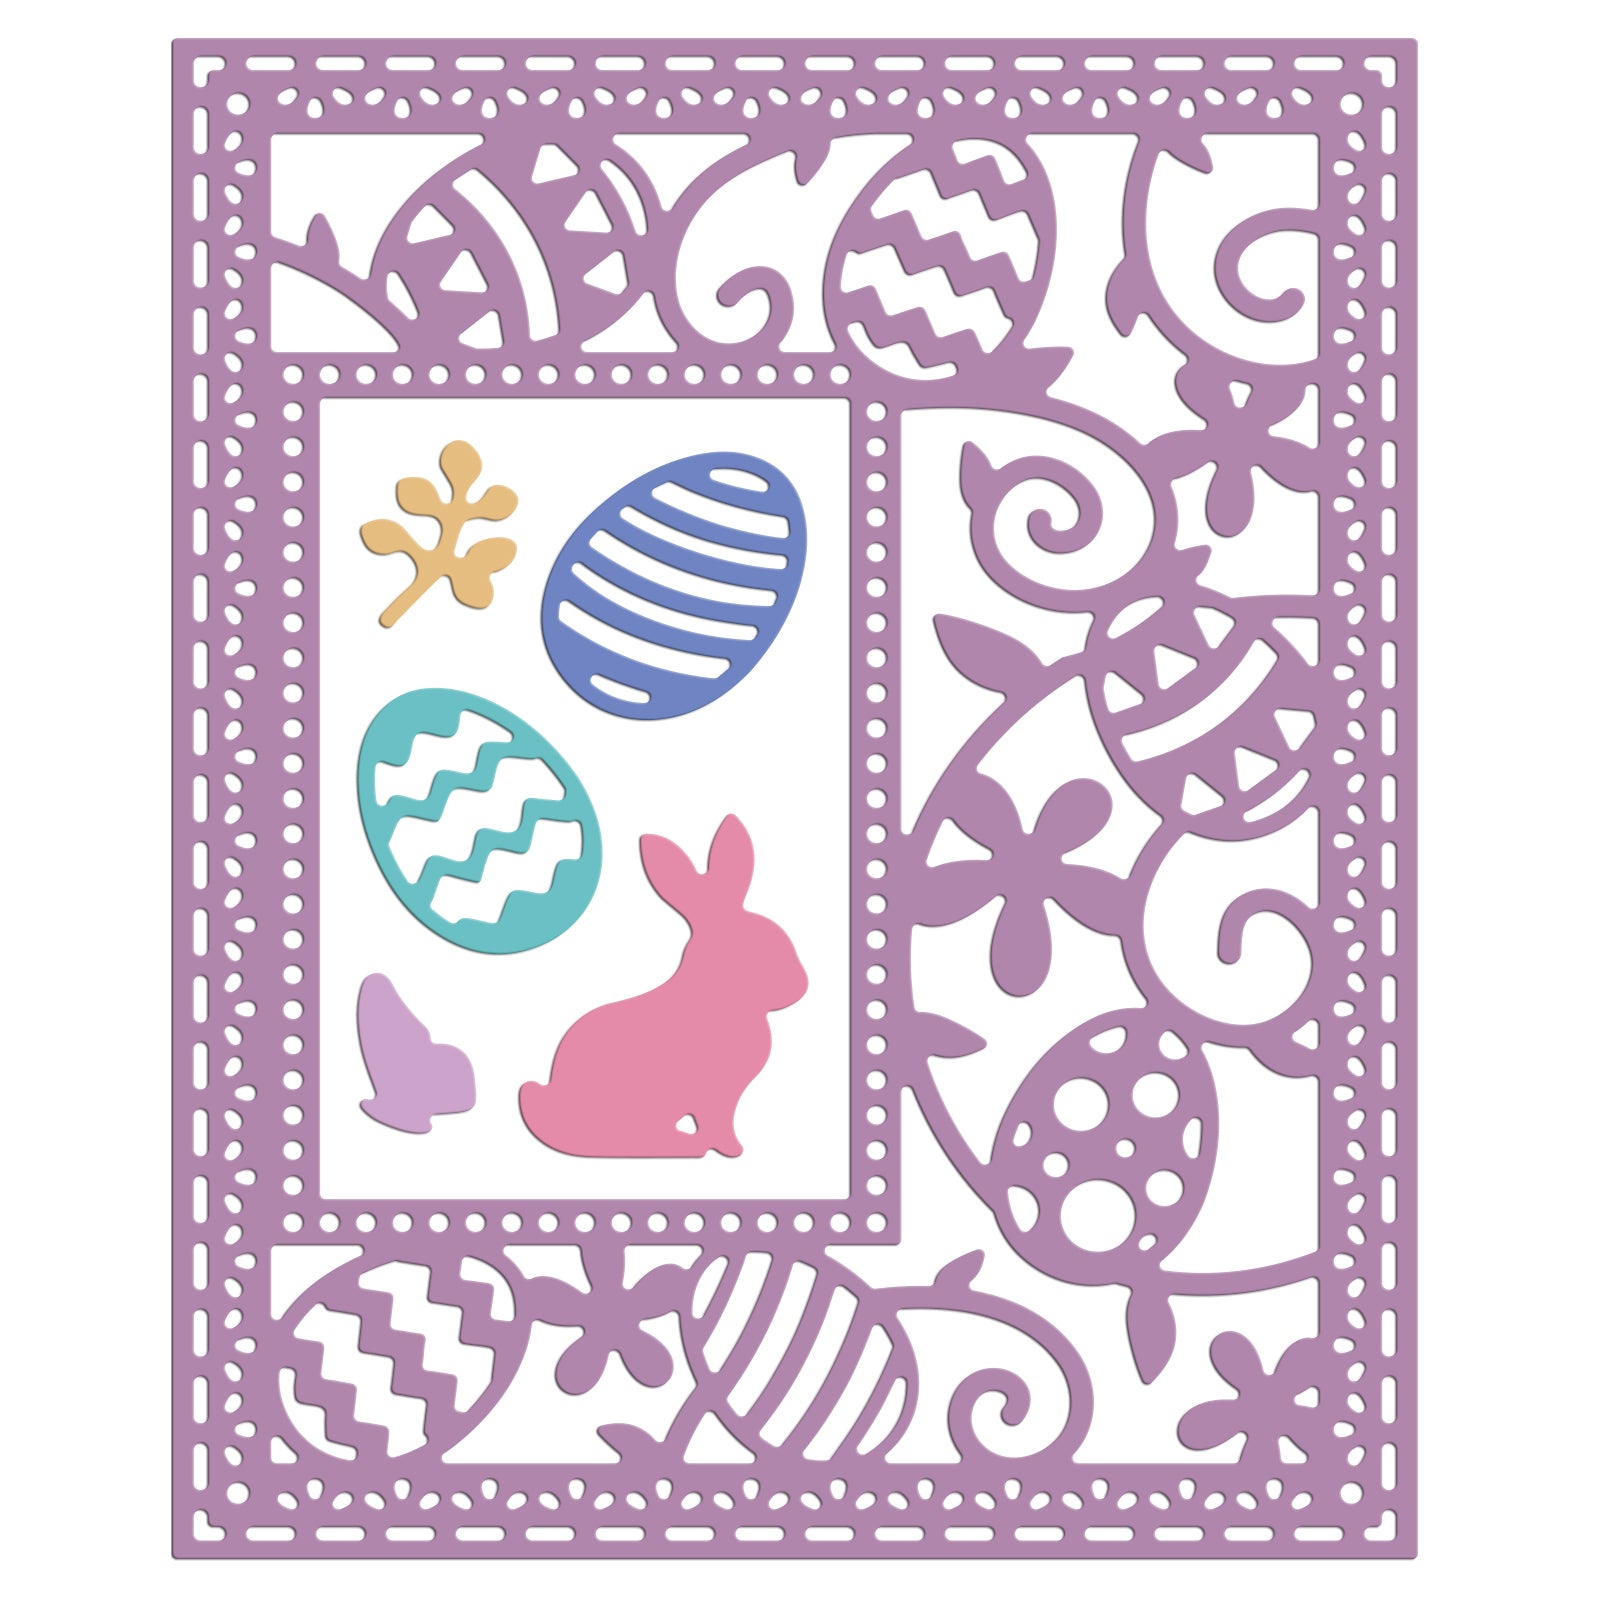 CRASPIRE Easter, Bunny, Eggs, Butterflies, Plants, Flowers Carbon Steel Cutting Dies Stencils, for DIY Scrapbooking/Photo Album, Decorative Embossing DIY Paper Card